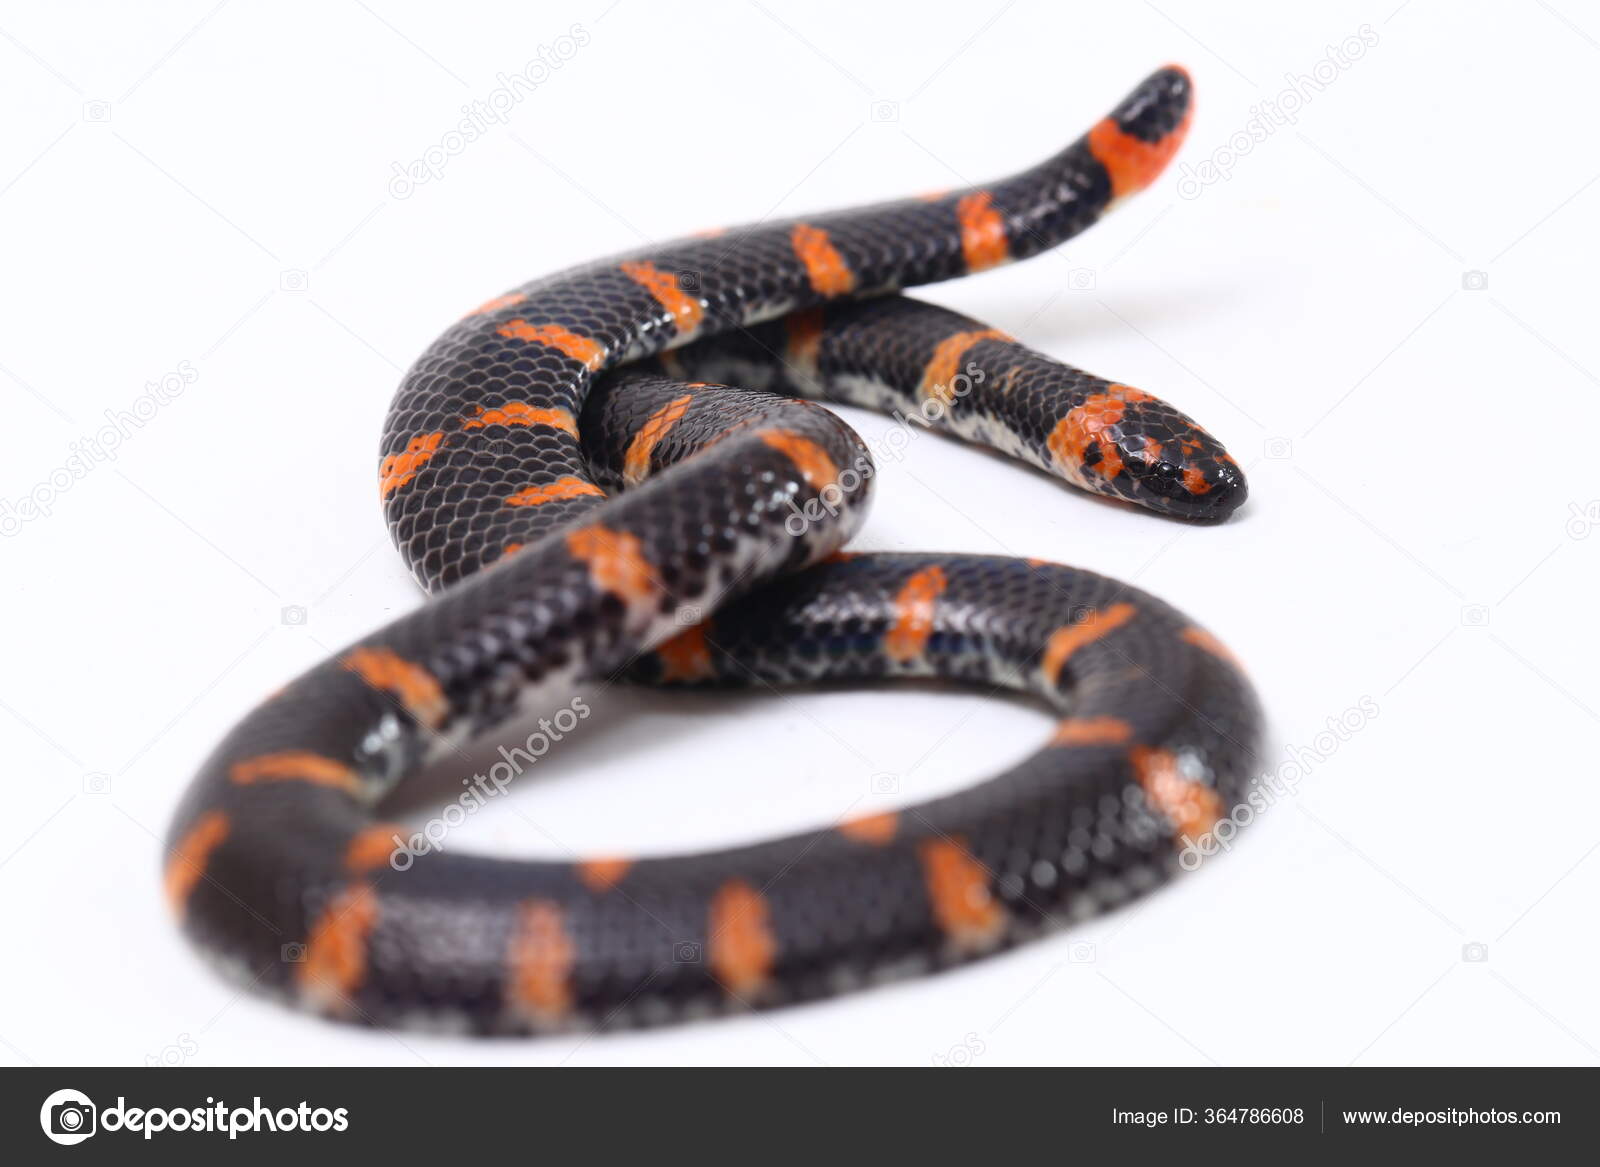 https://st3.depositphotos.com/33324032/36478/i/1600/depositphotos_364786608-stock-photo-red-tailed-pipe-snake-scientific.jpg